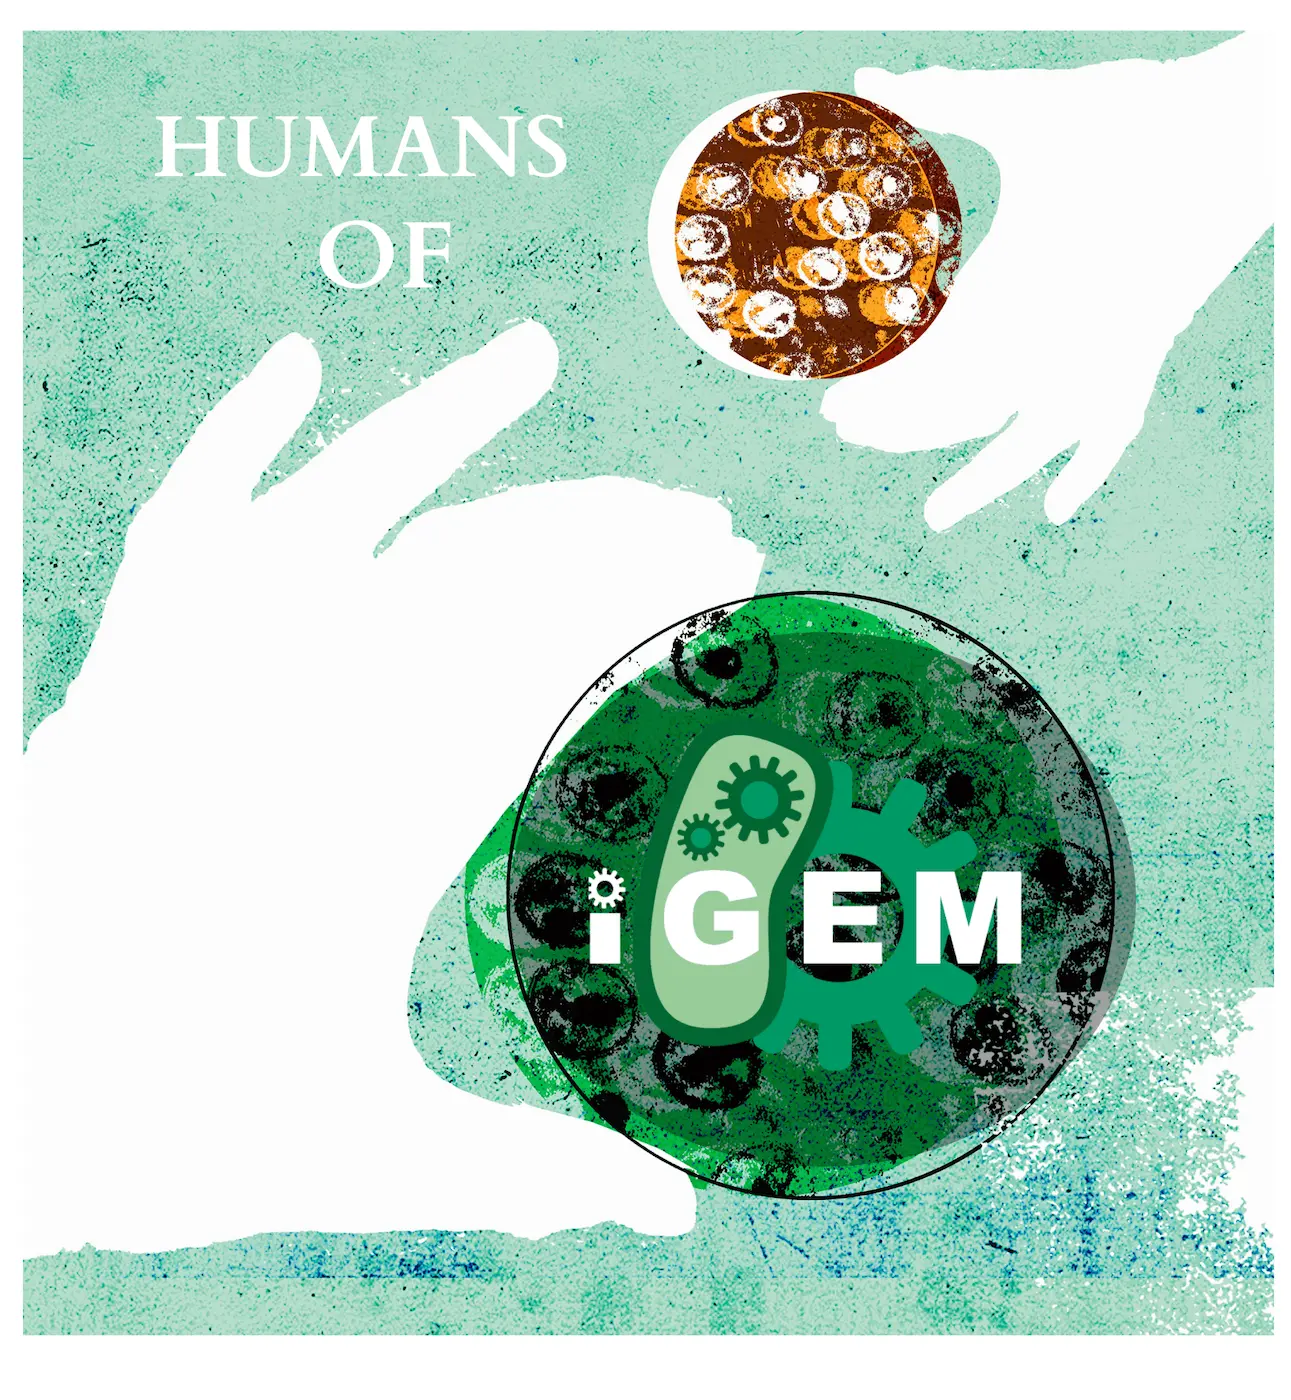 The Humans of iGEM initiative